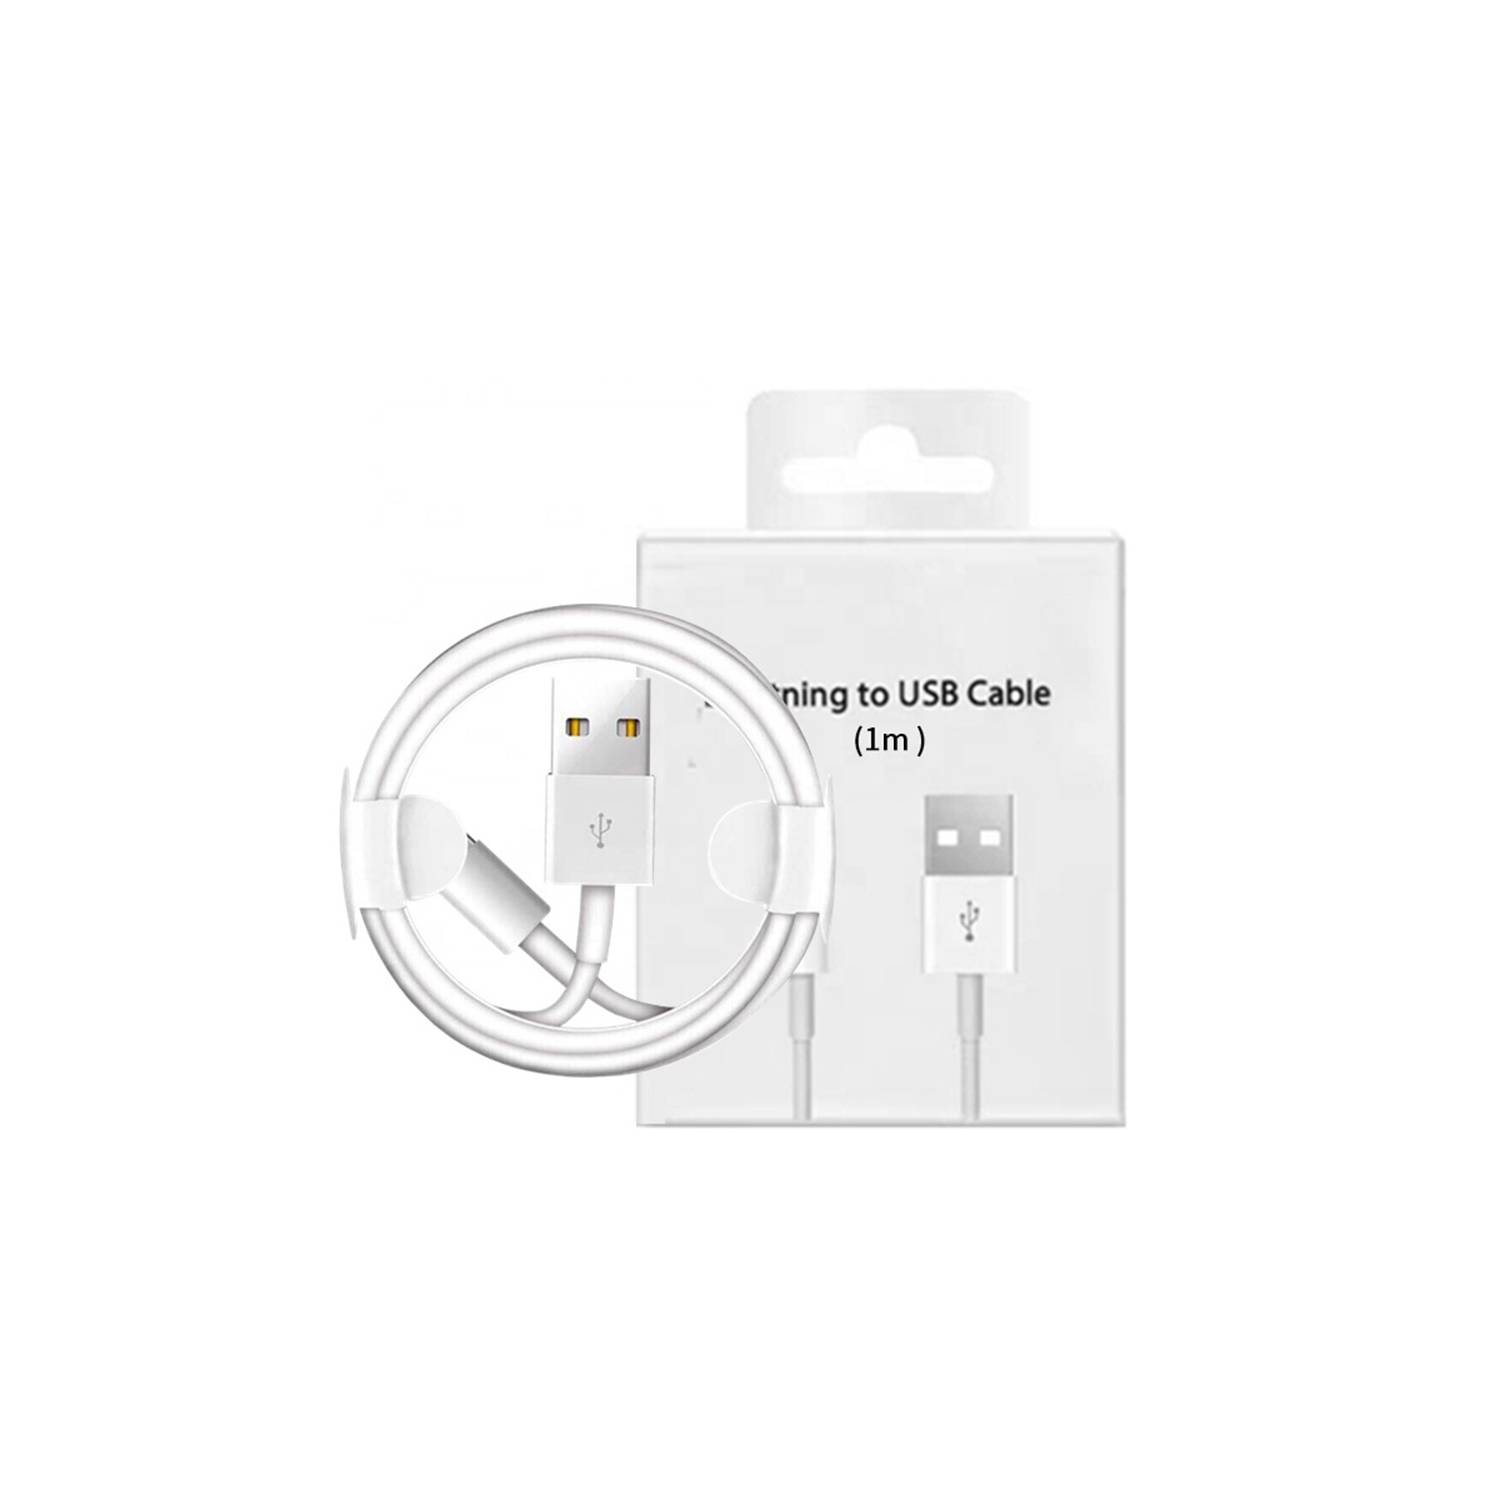 Cable usb lightning + cargador iphone 5, 6, 7,8 Blanco 2M GENERICO